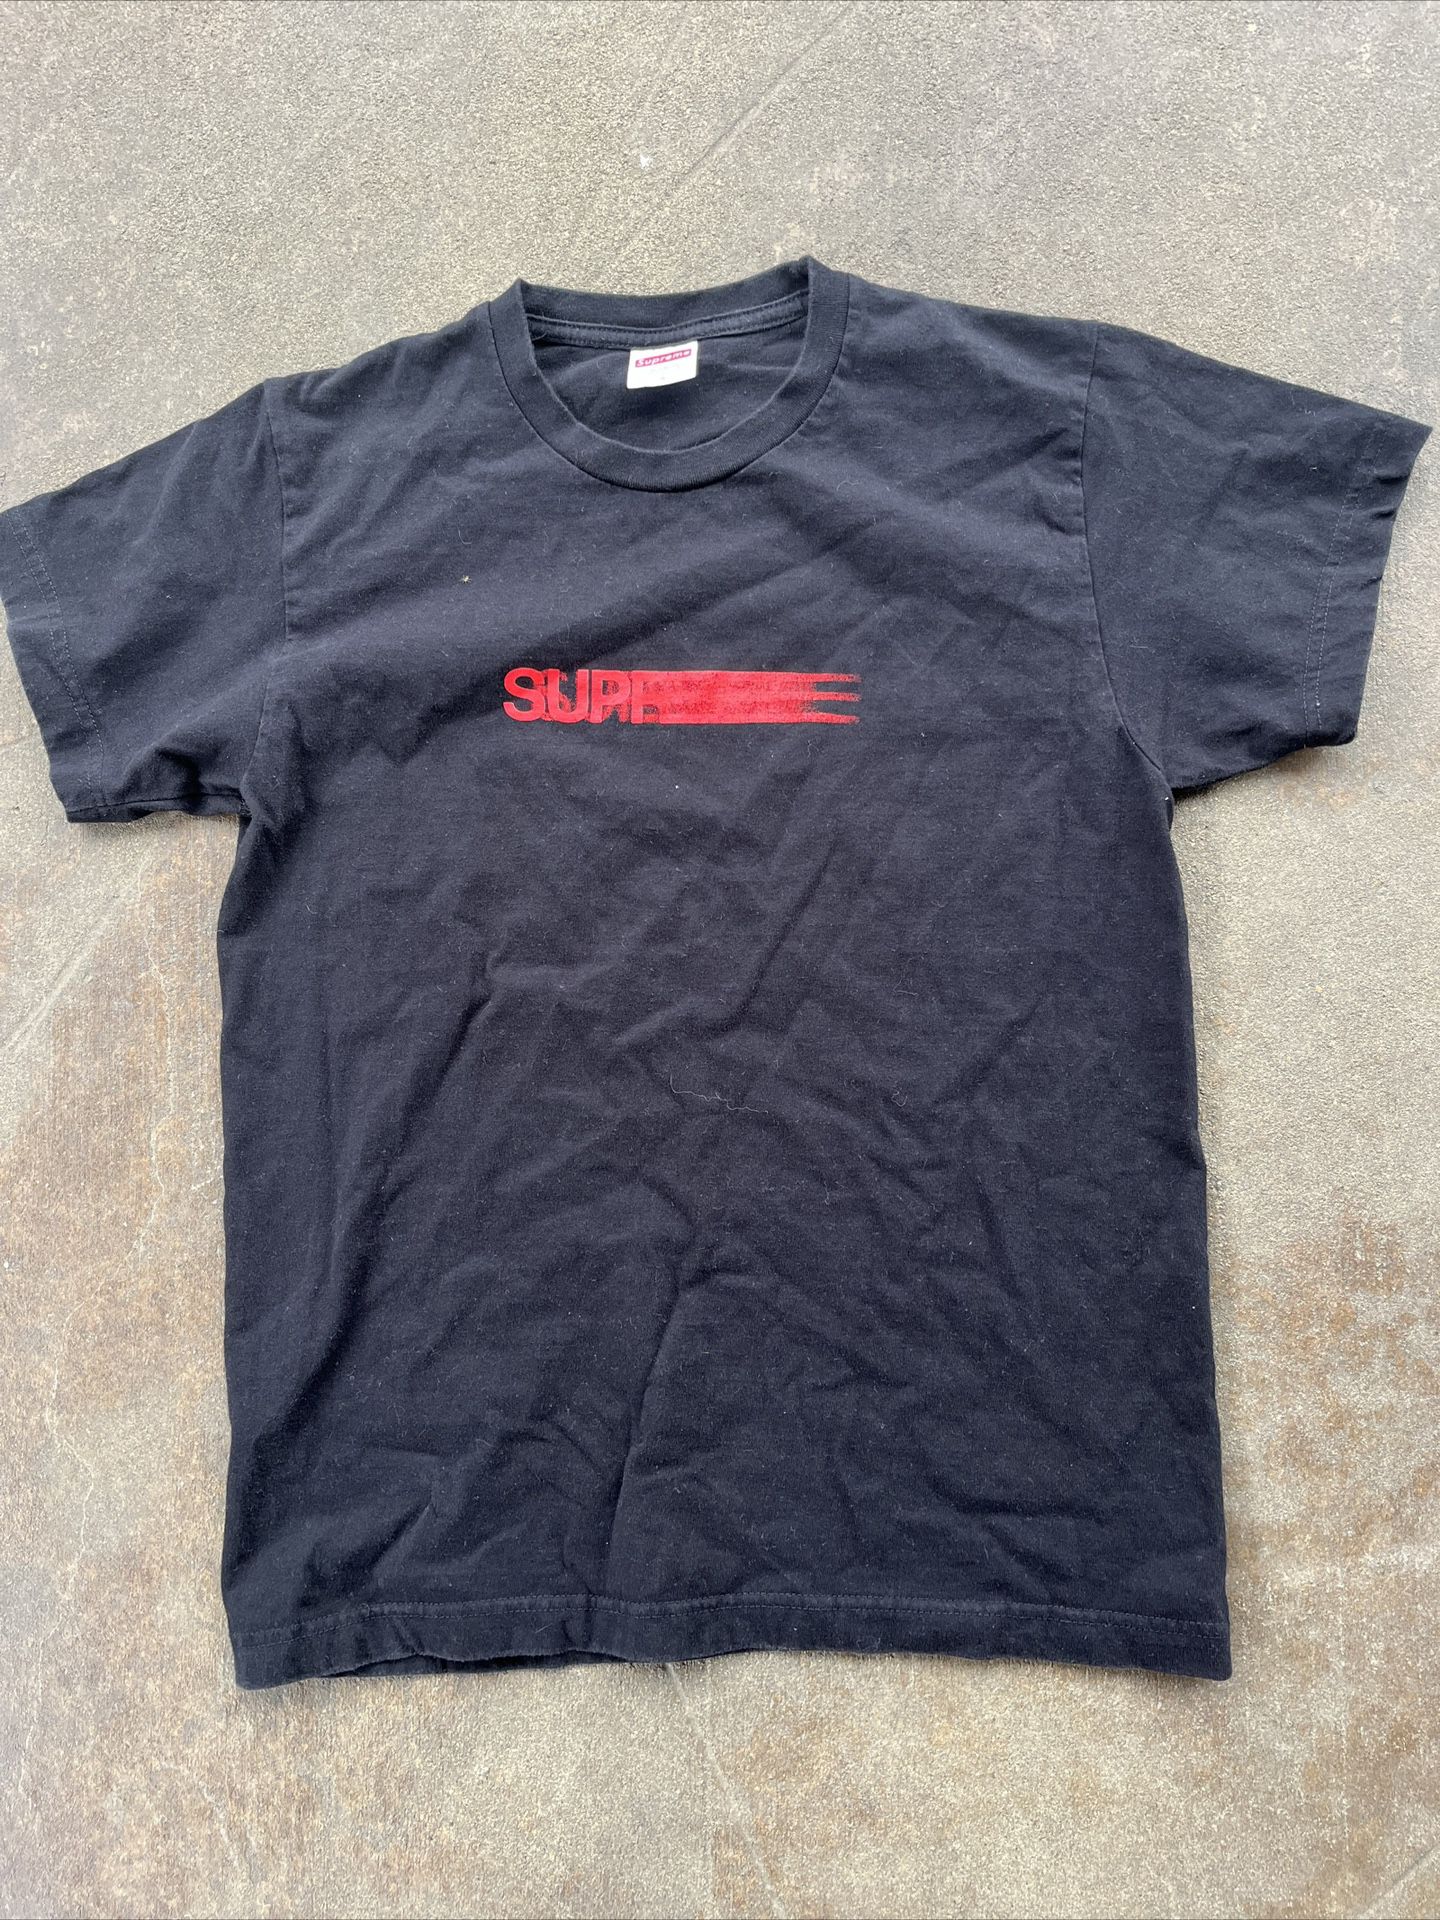 Supreme Shirt Motion logo Black Sz Small